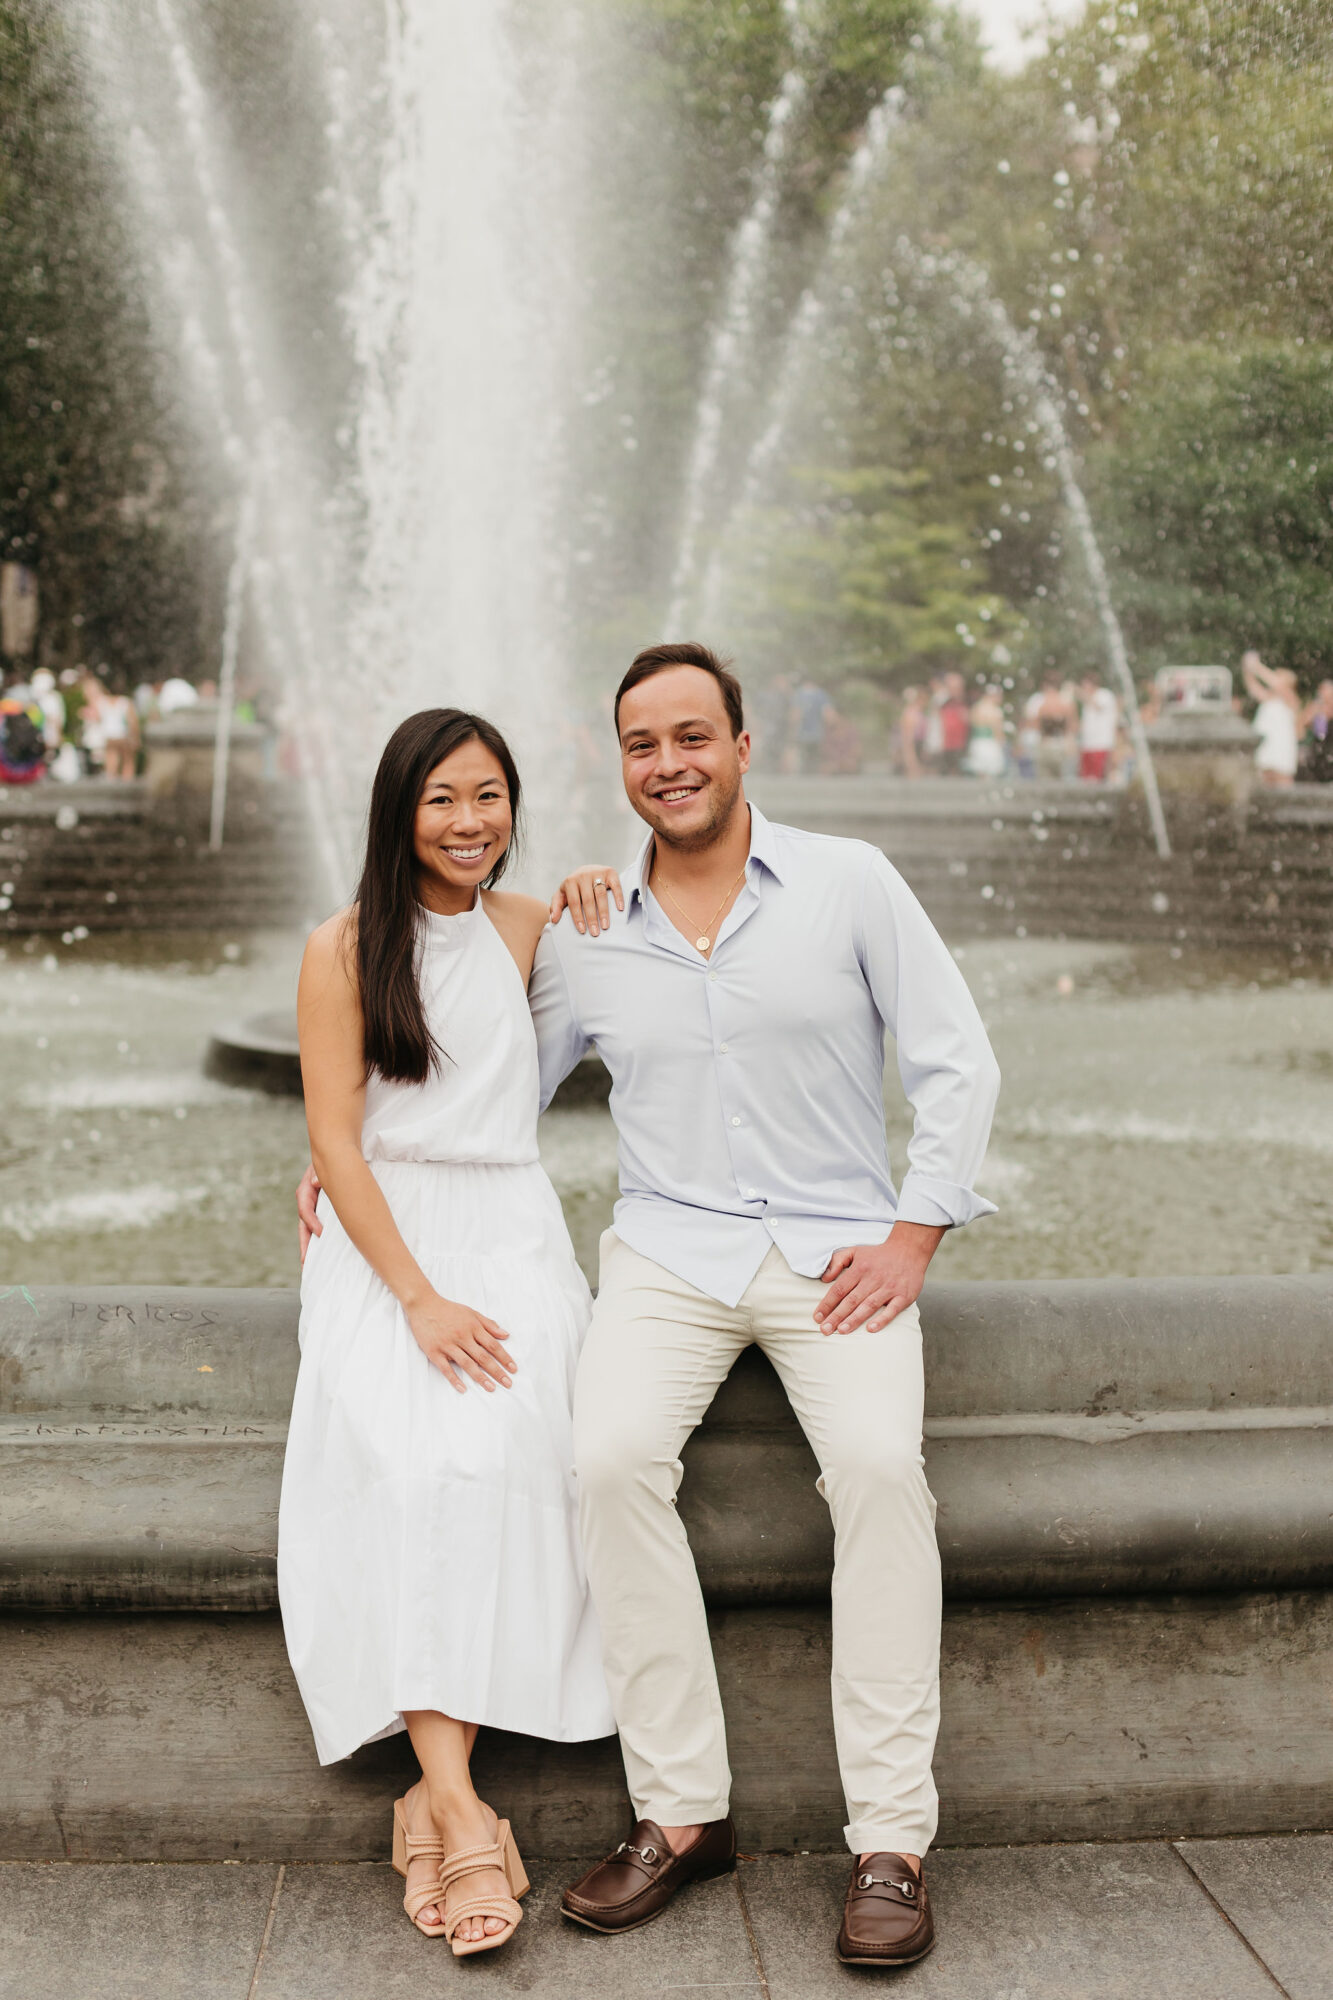 Washington square park, engagement photos, fountain, new york city streets, white dress